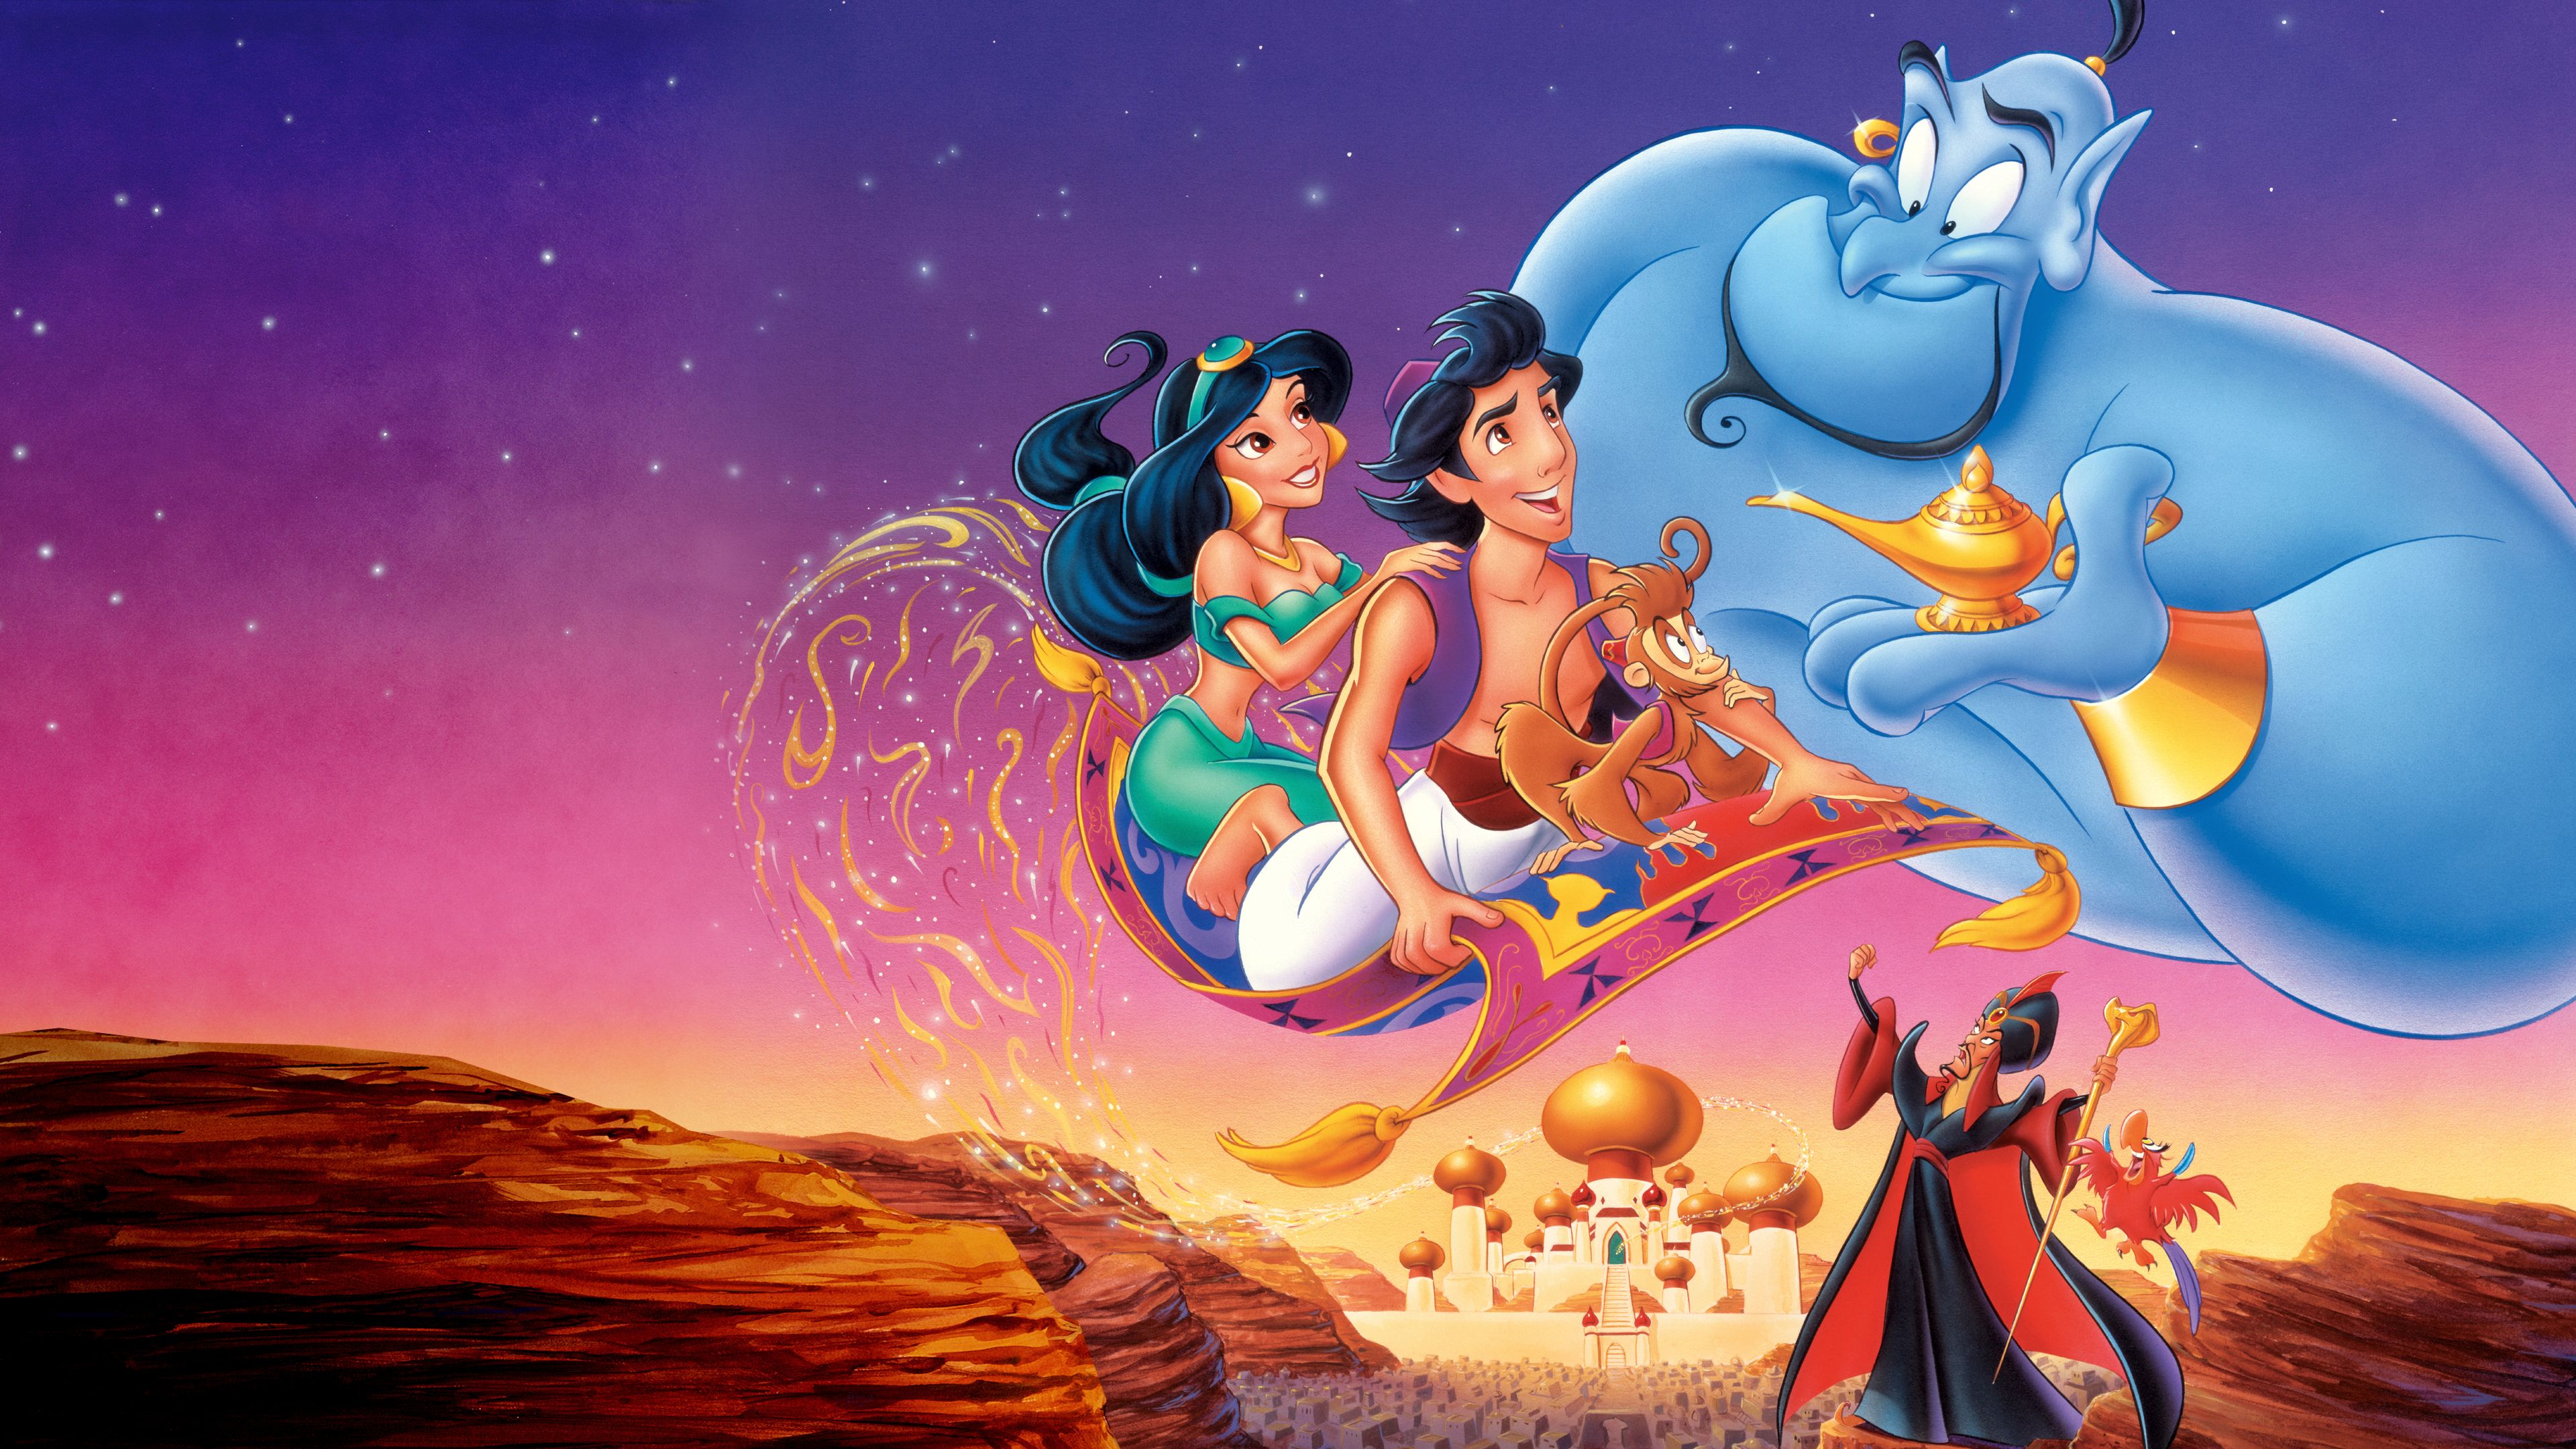 Watch Aladdin (1992) | Full Movie | Disney+